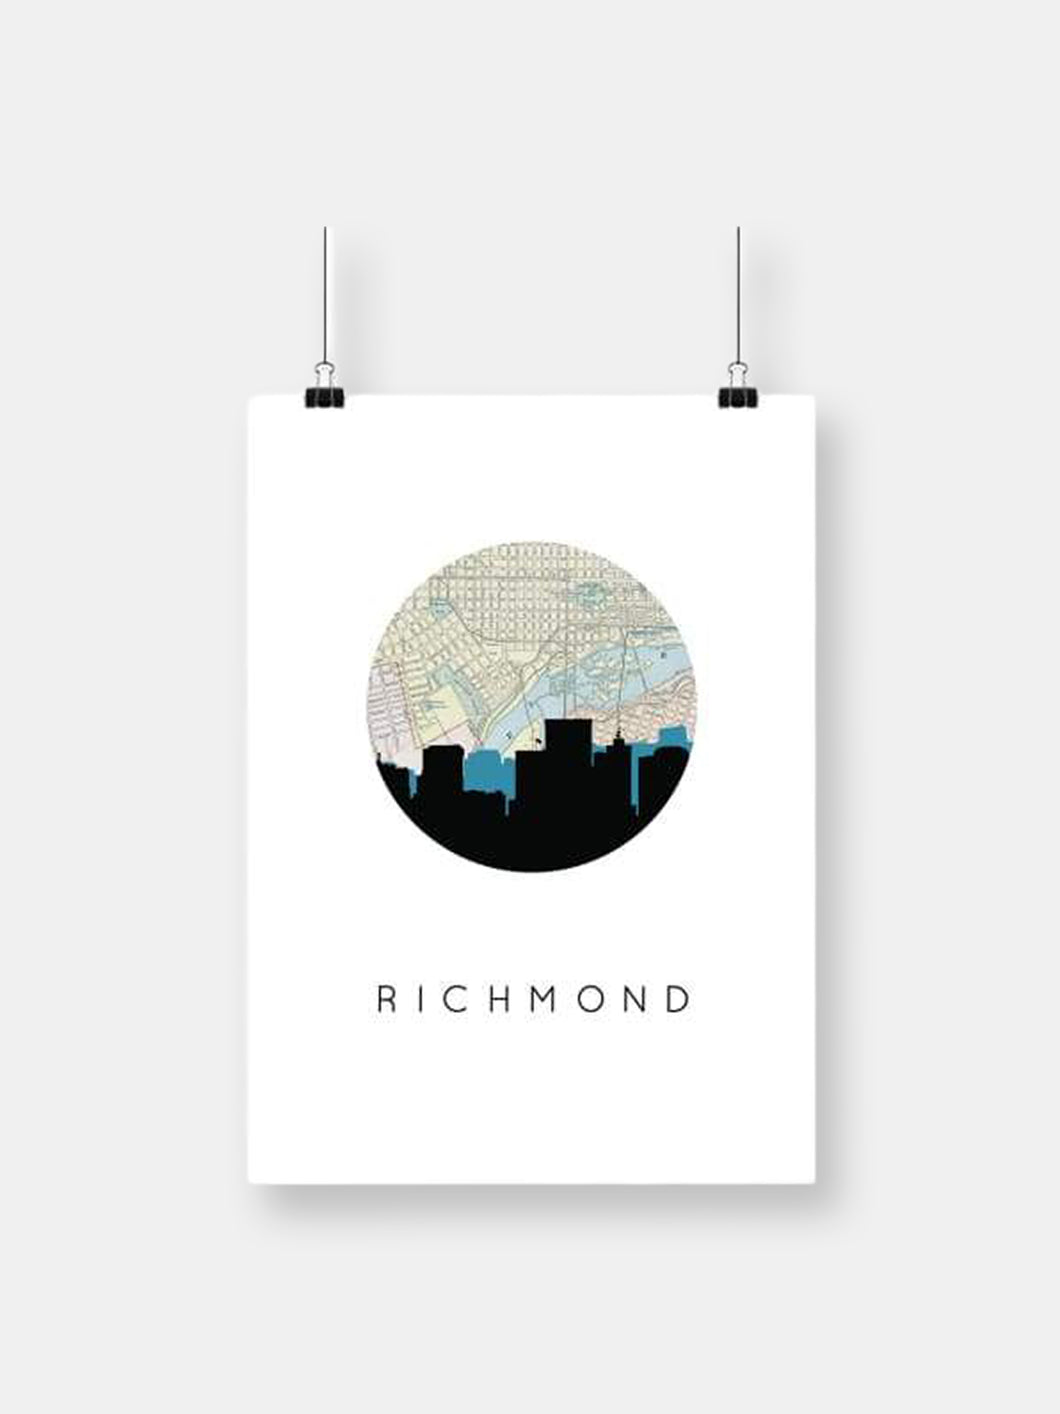 Richmond, Virginia City Skyline With Vintage Richmond Map